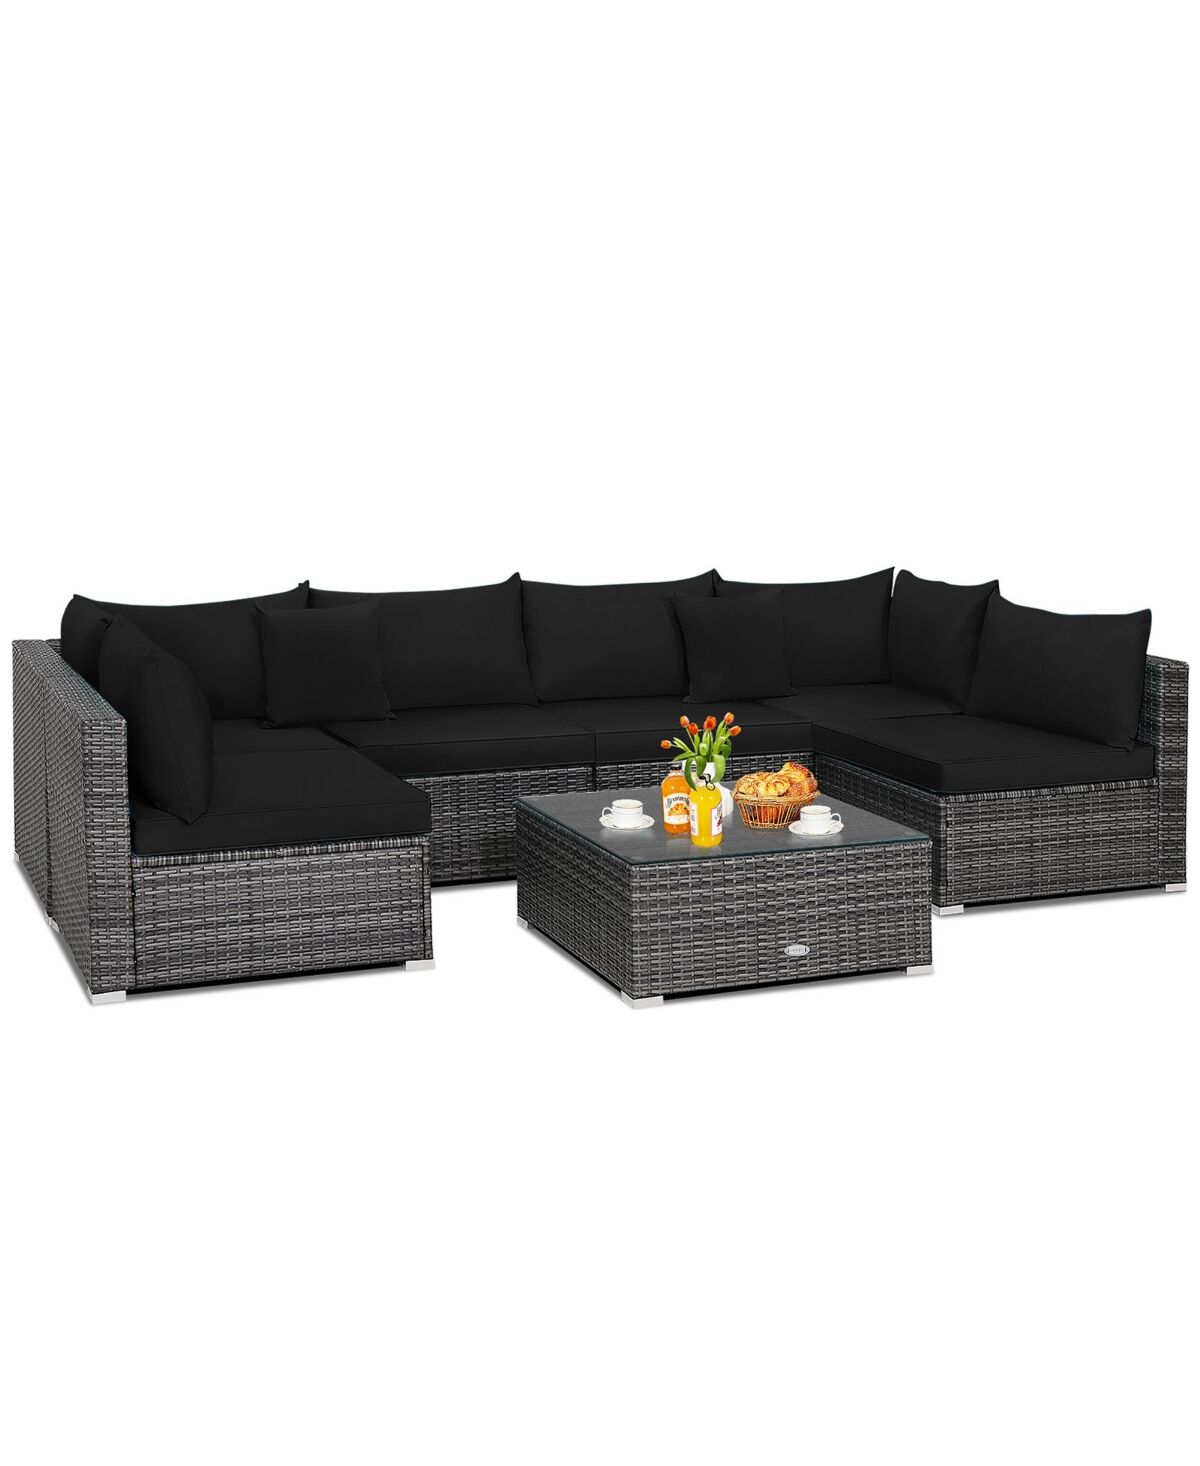 Costway 7PCS Patio Rattan Furniture Set Sectional Sofa Cushioned Garden - Black